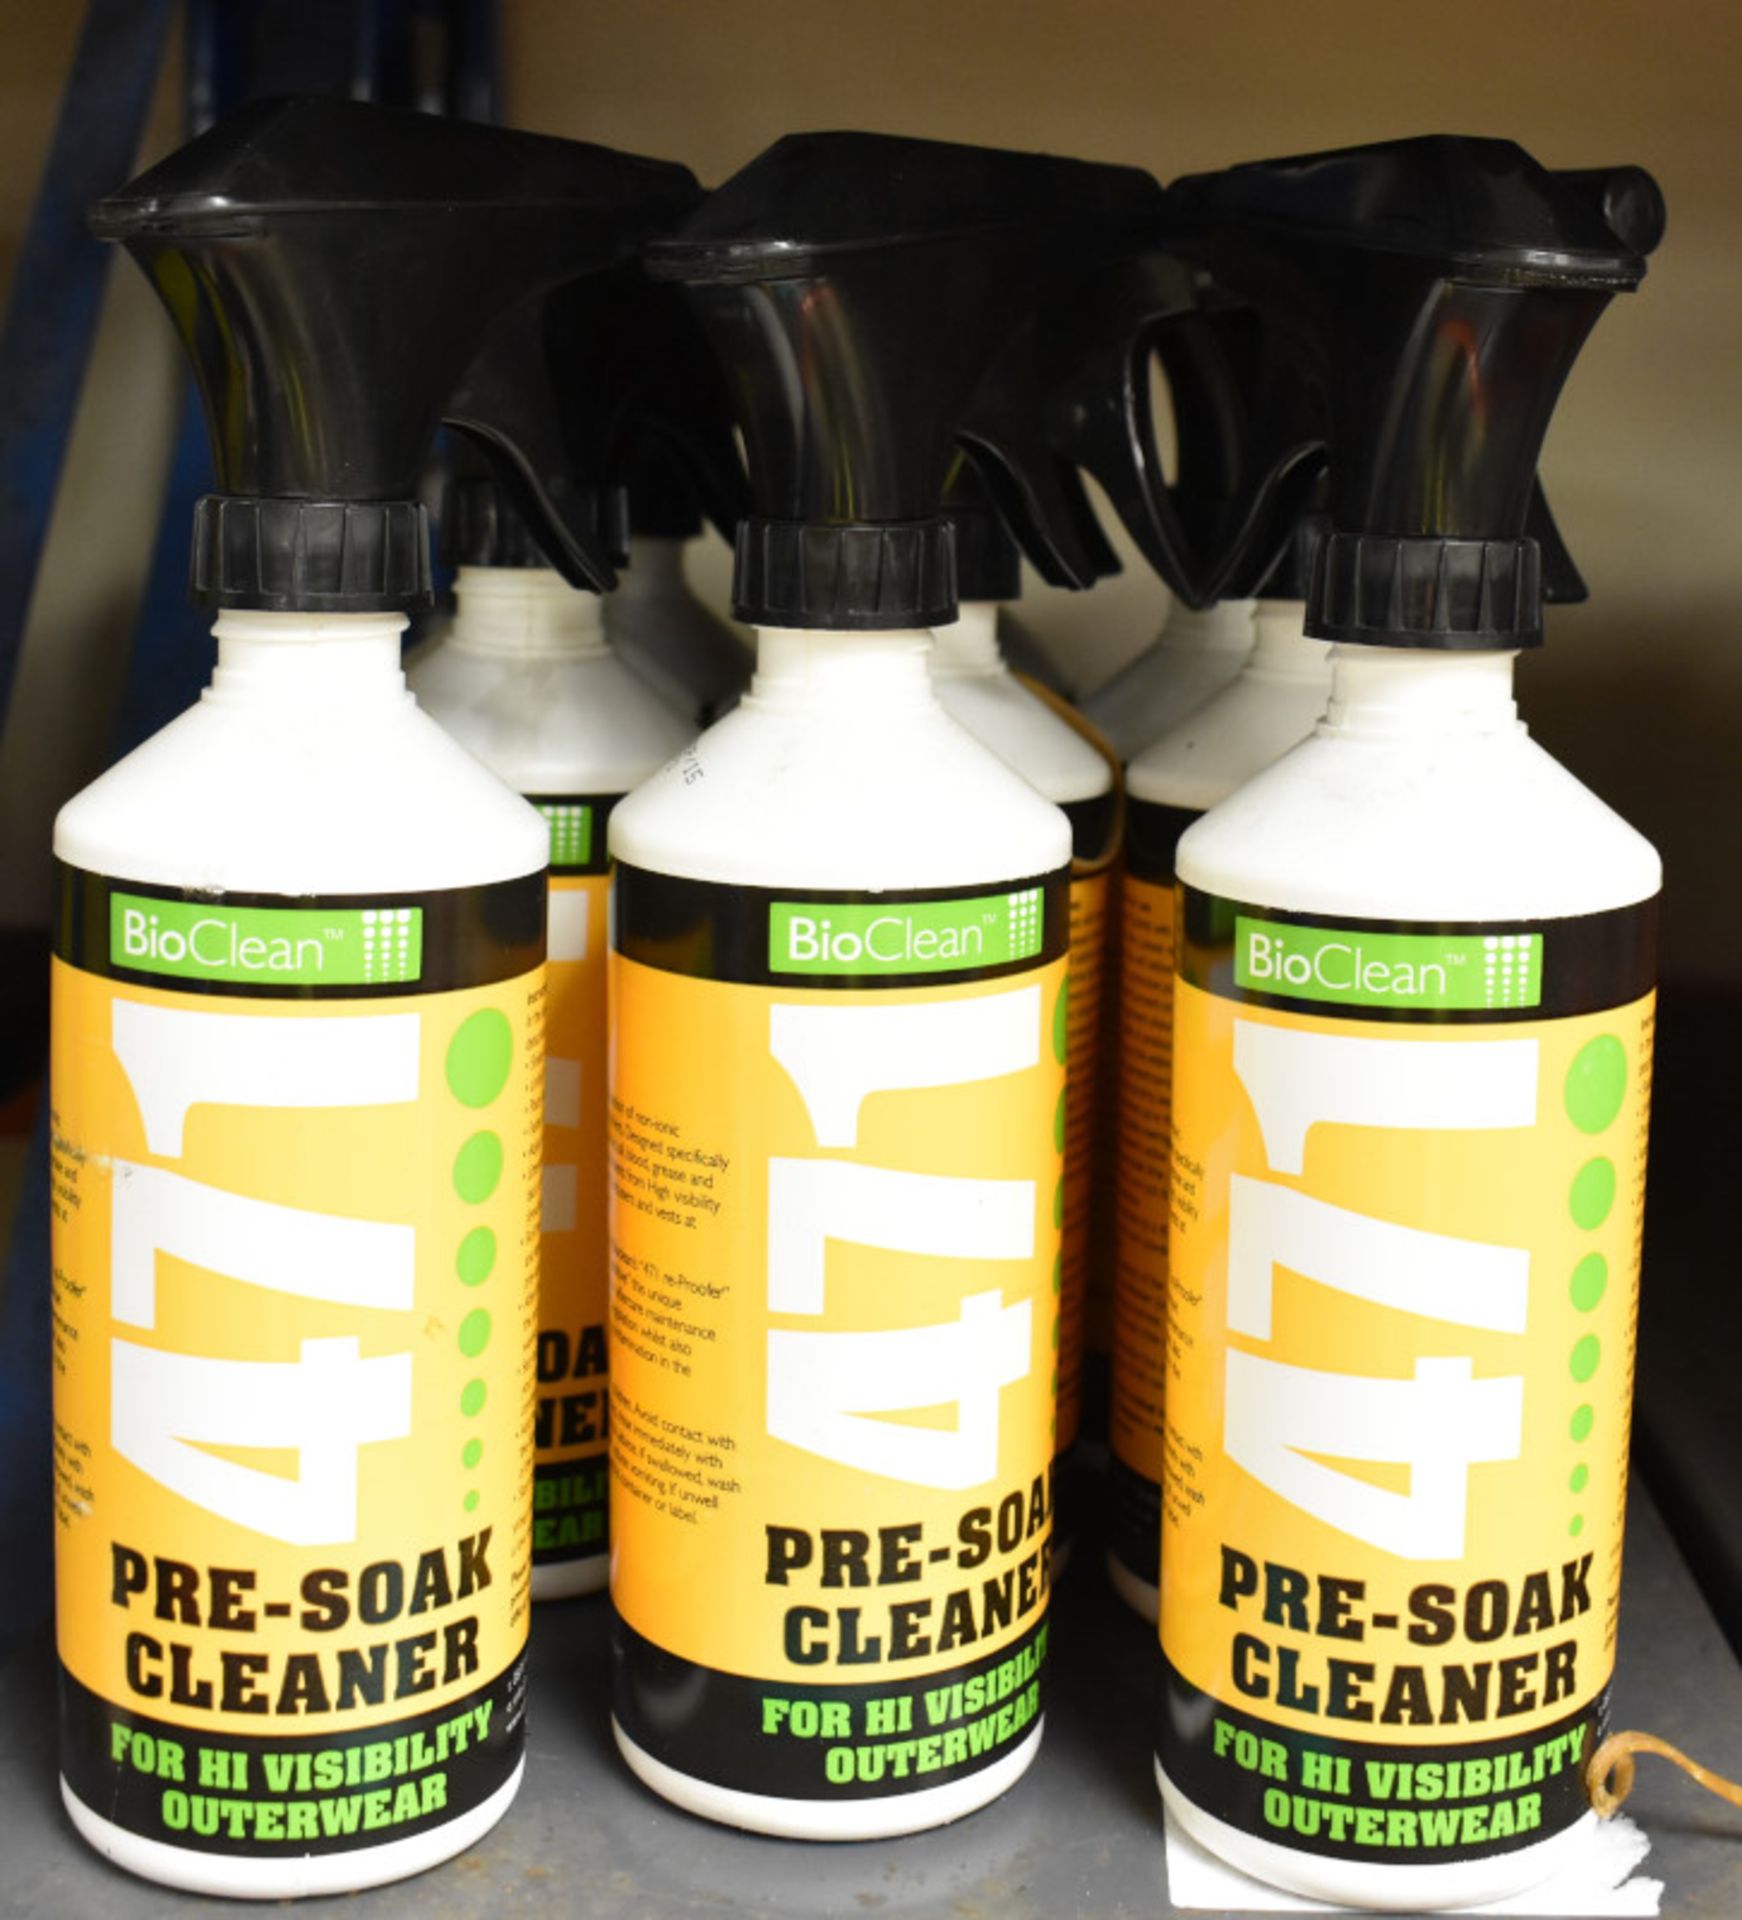 12x BioClean 471 Pre-soak Cleaner for Hi Visibility Outerwear - 400ml spray bottles